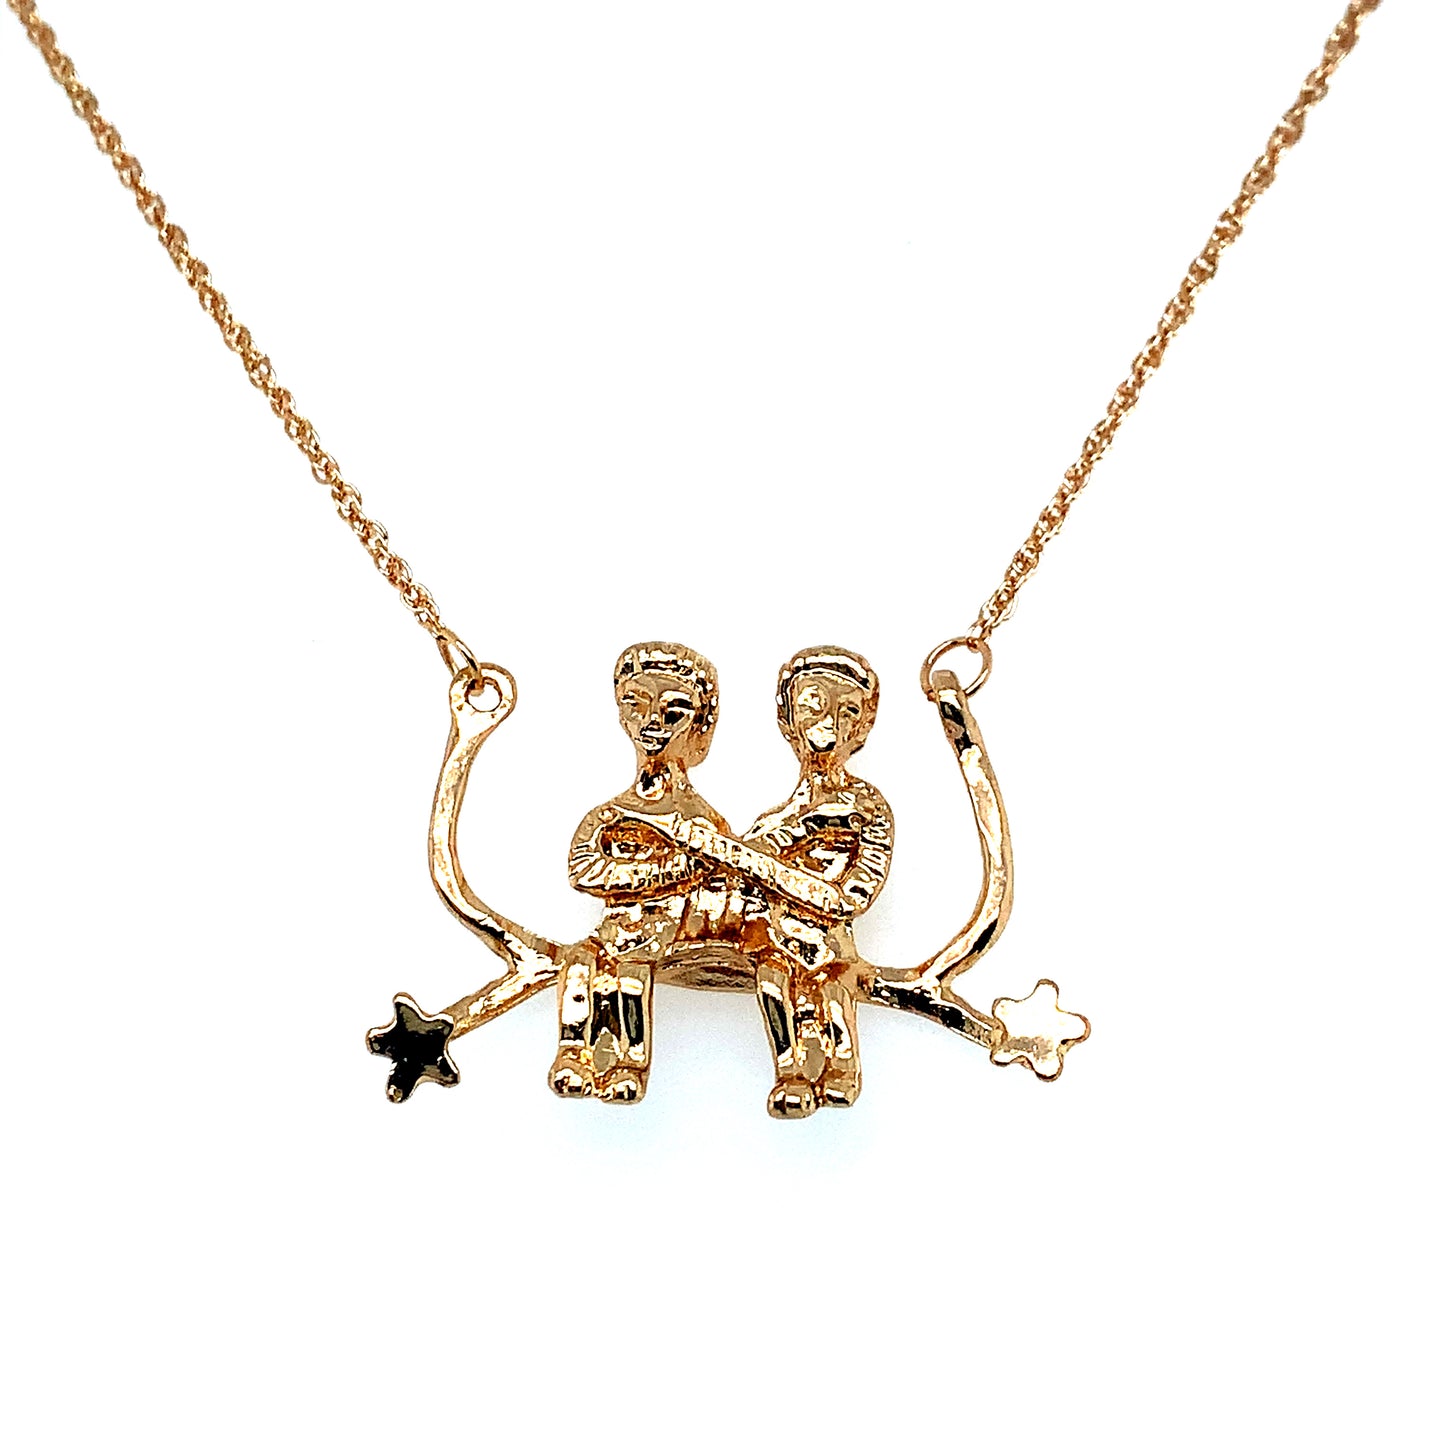 ♊ Gemini (Twins) Necklace